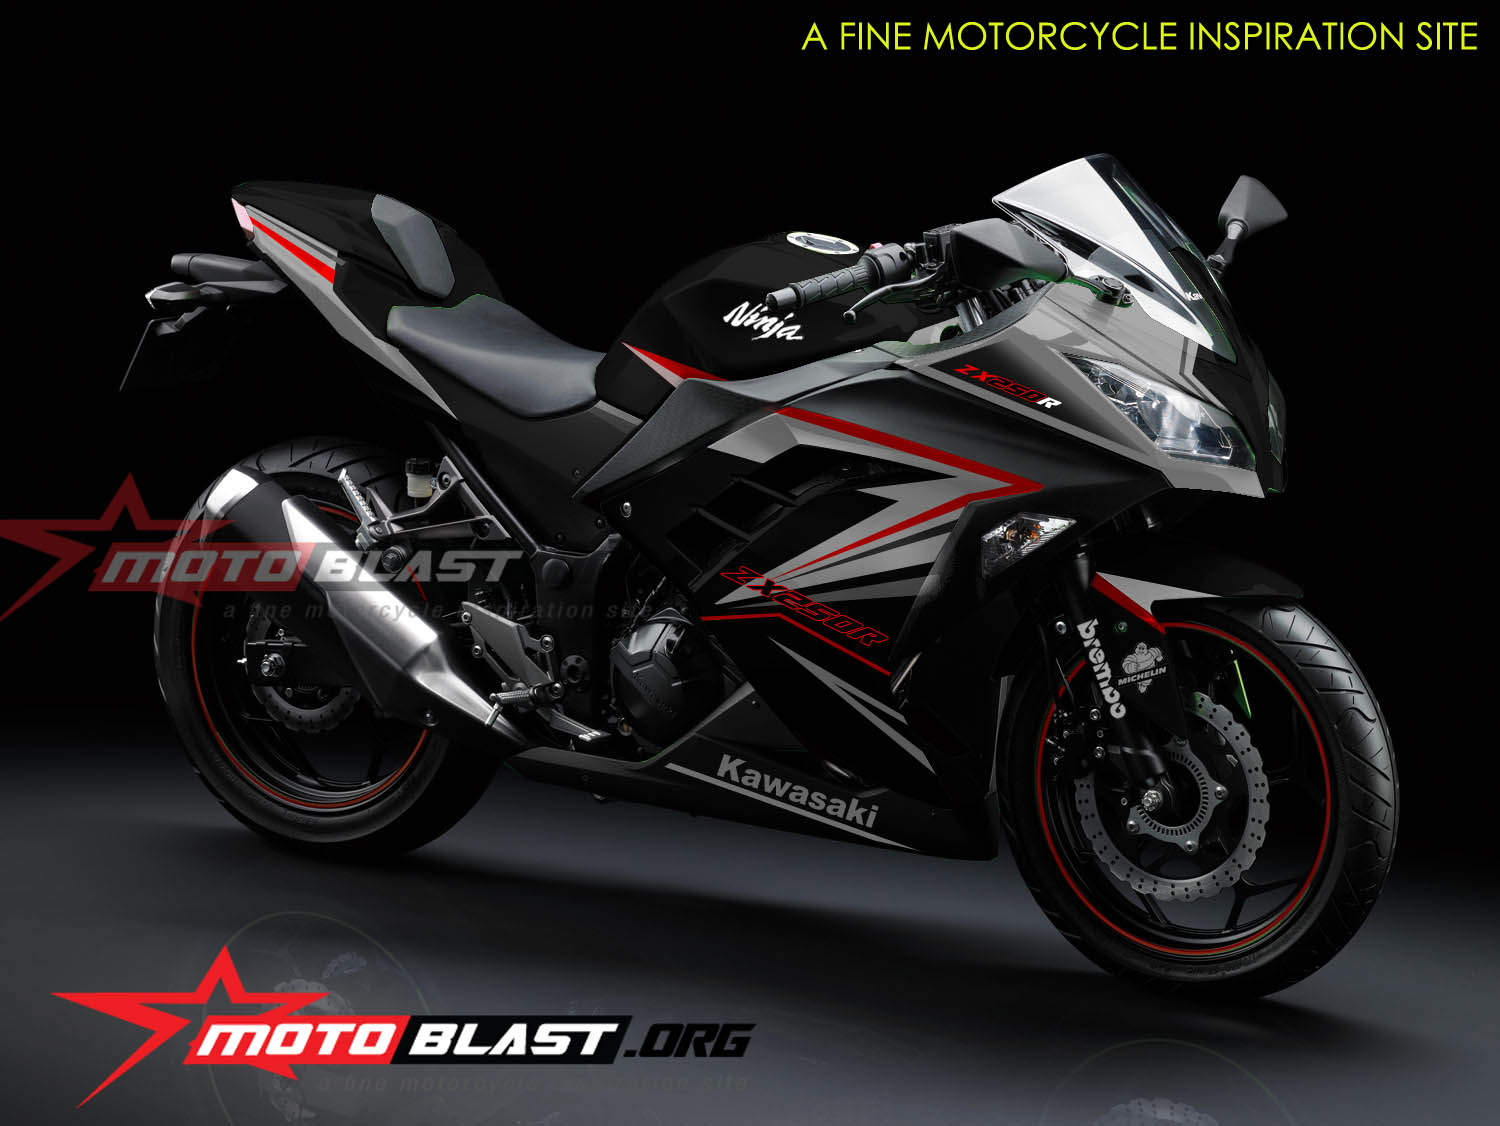  Modif  Striping Kawasaki Ninja  250R FI  Black Red 2014 